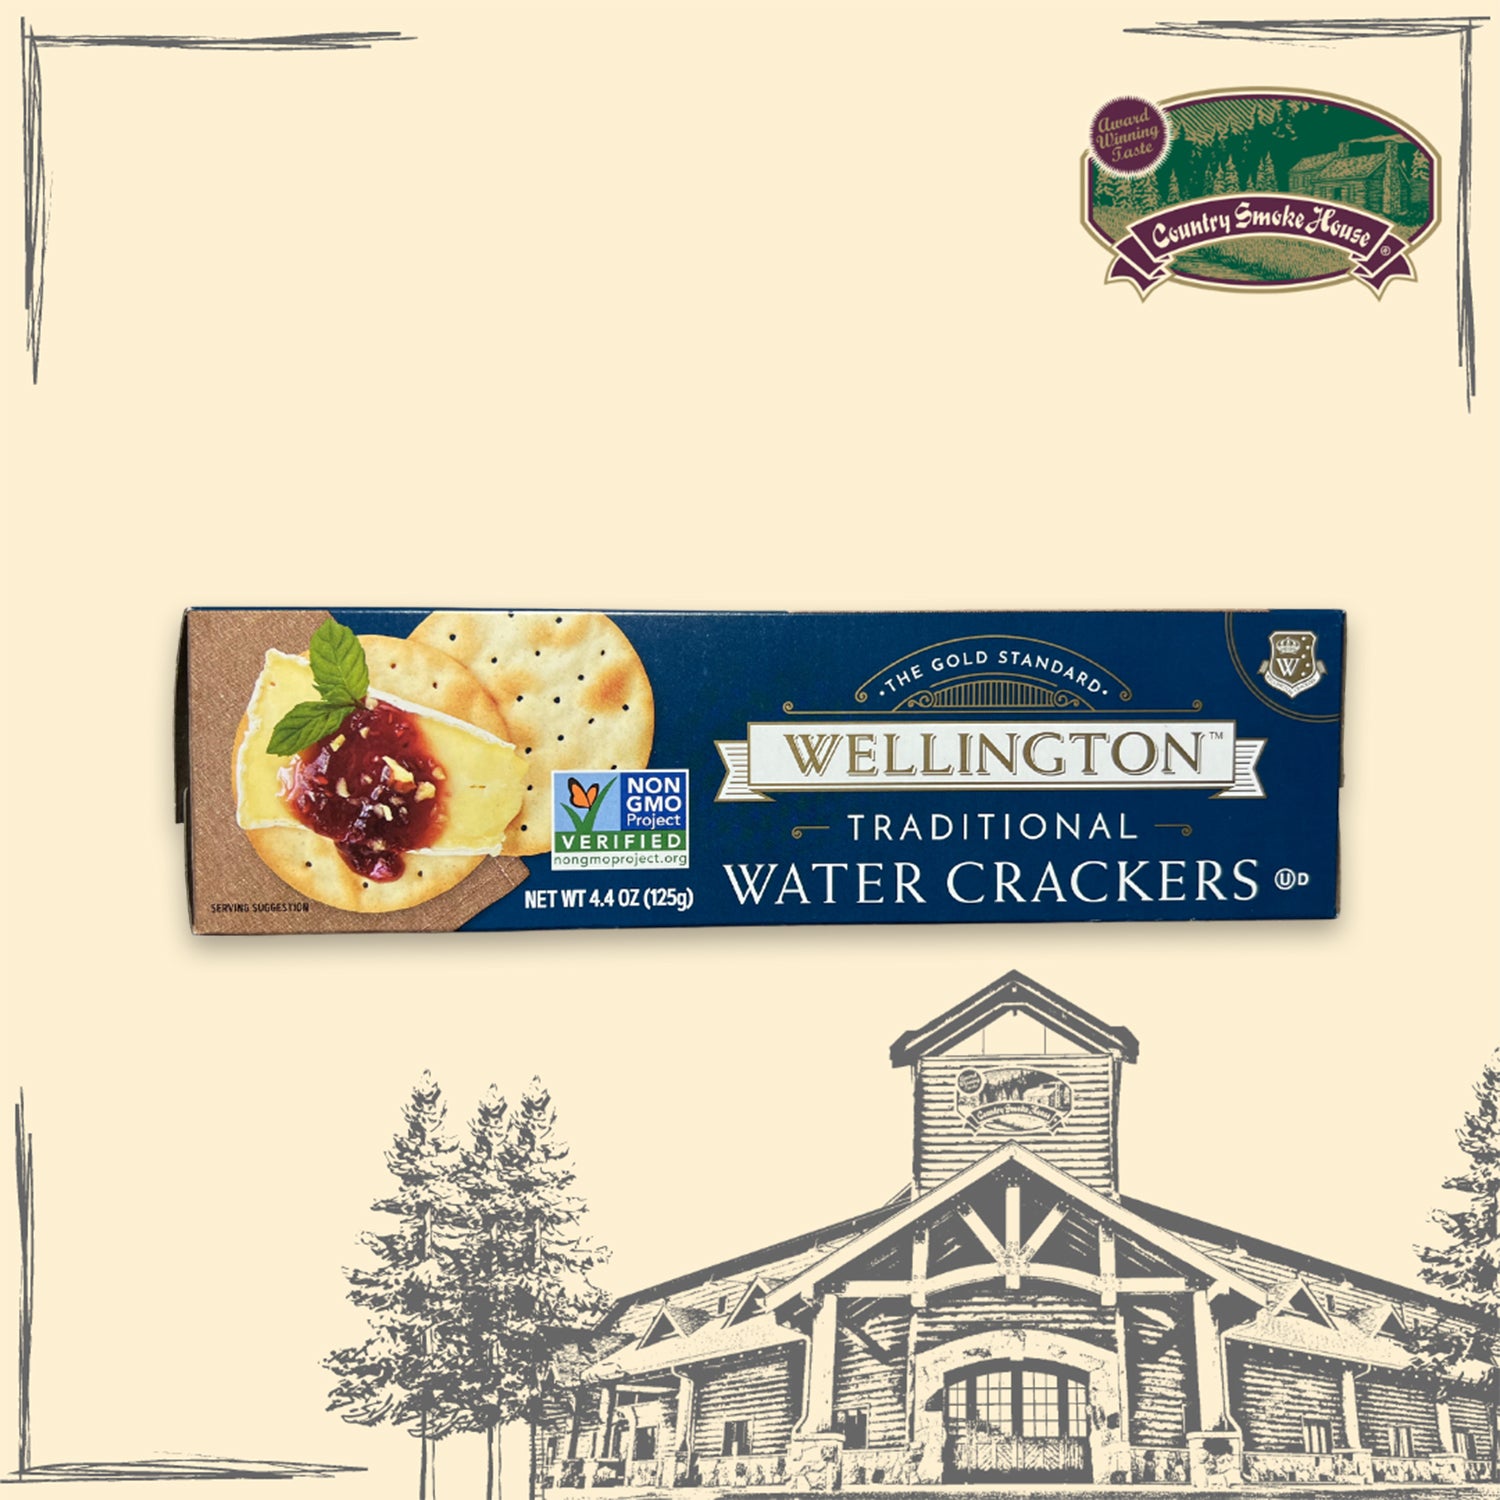 Wellington Traditional Water Crackers